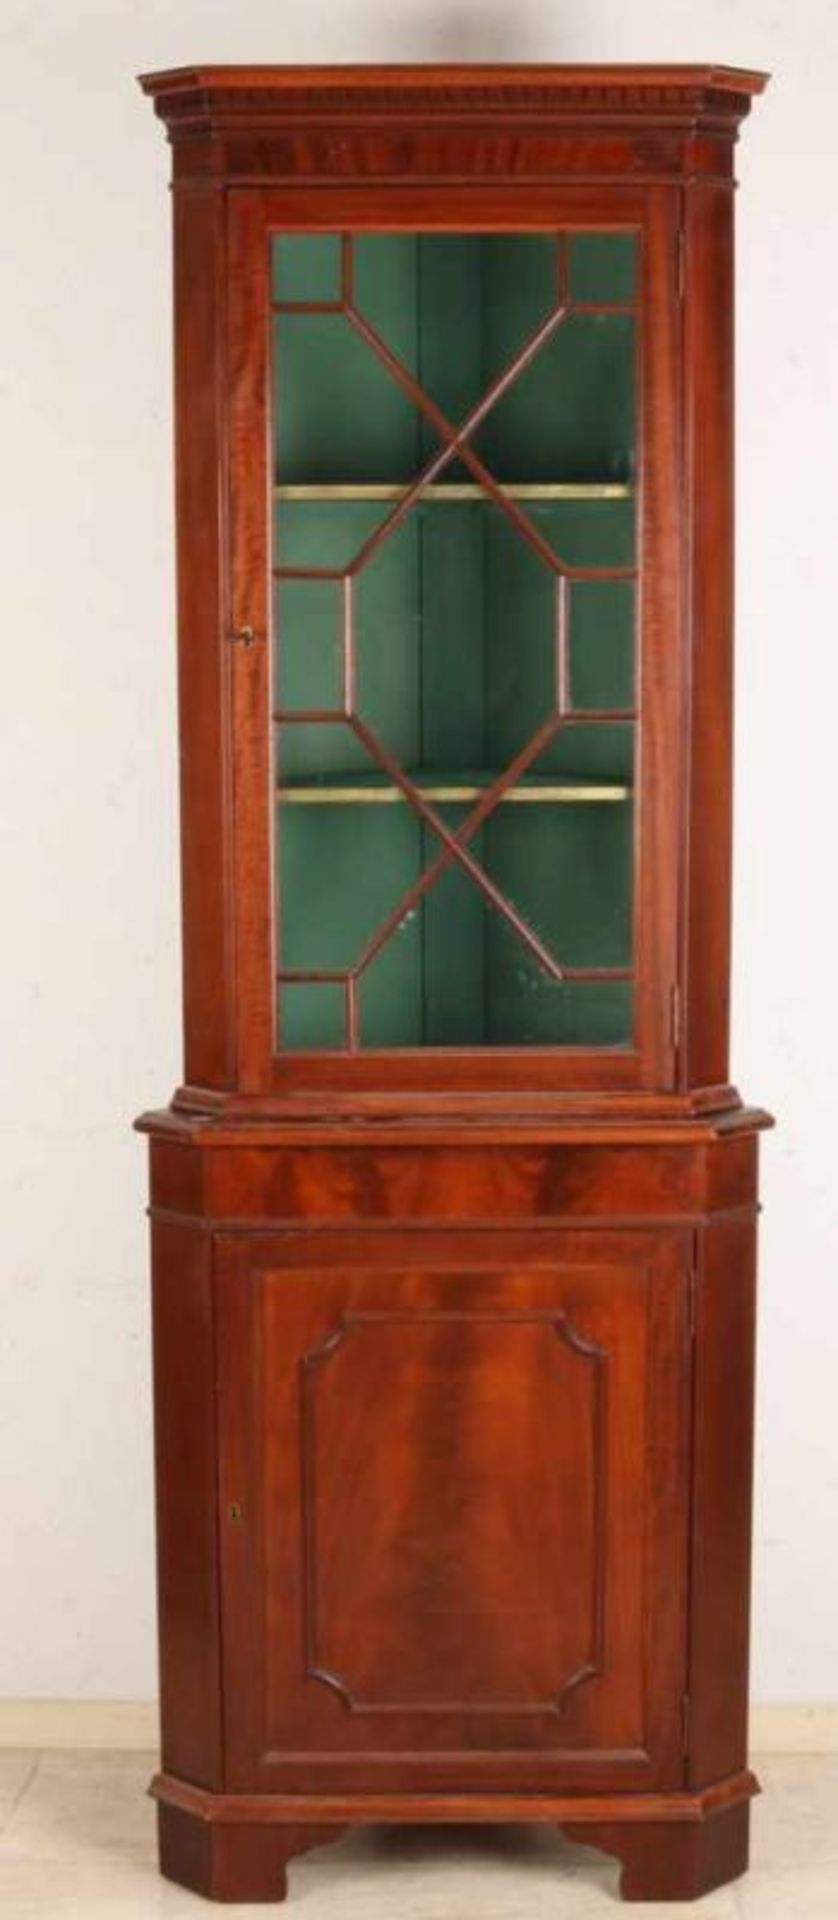 English mahogany corner-wardrobe closet. Second half 20th century. Two-door style furniture.